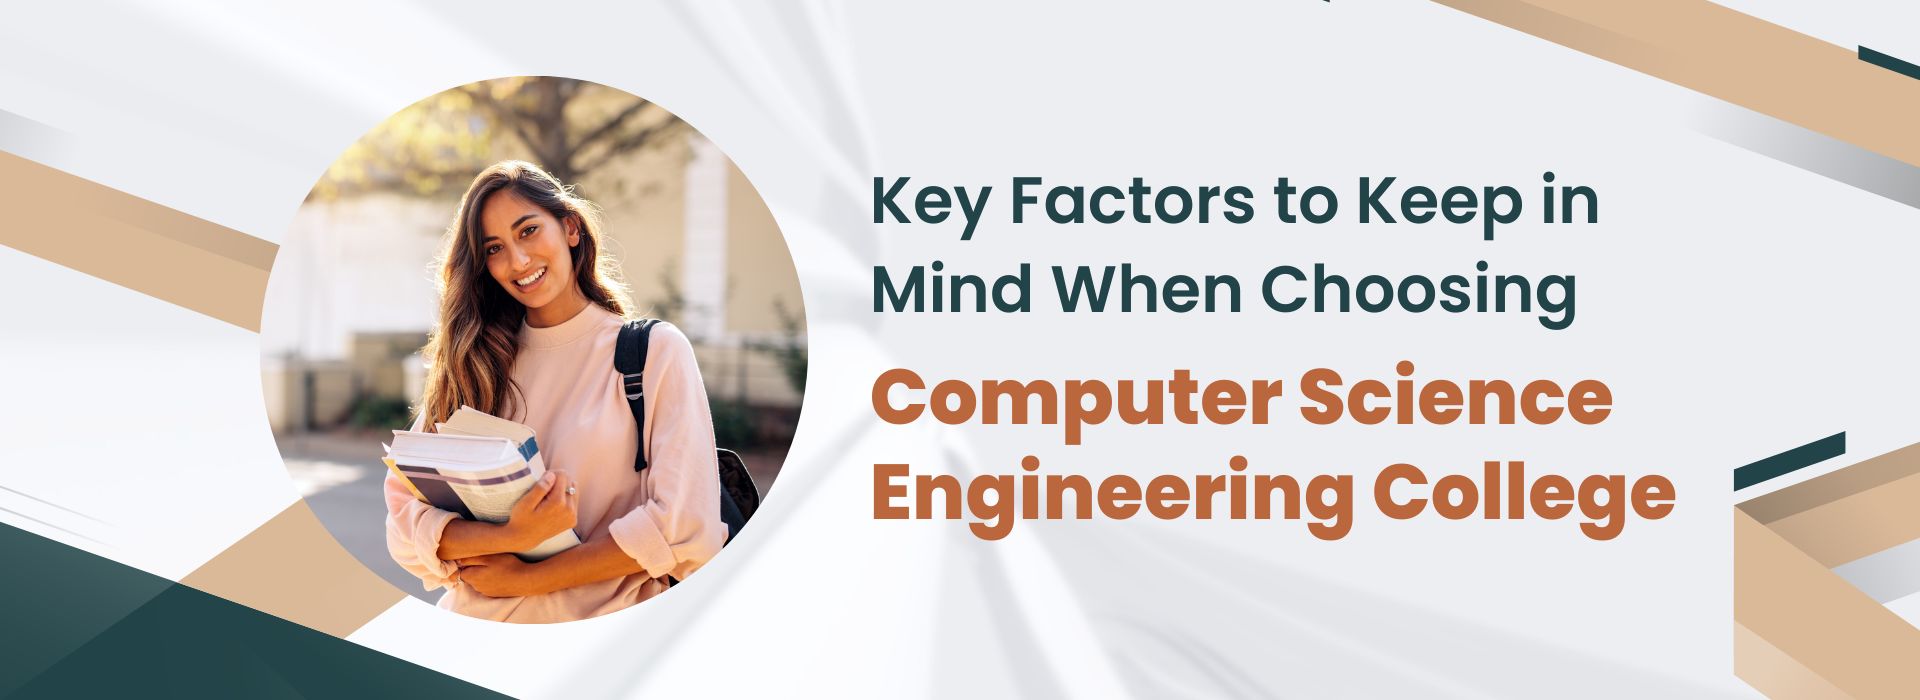 Key Factors to Keep in Mind When Choosing Computer Science Engineering College